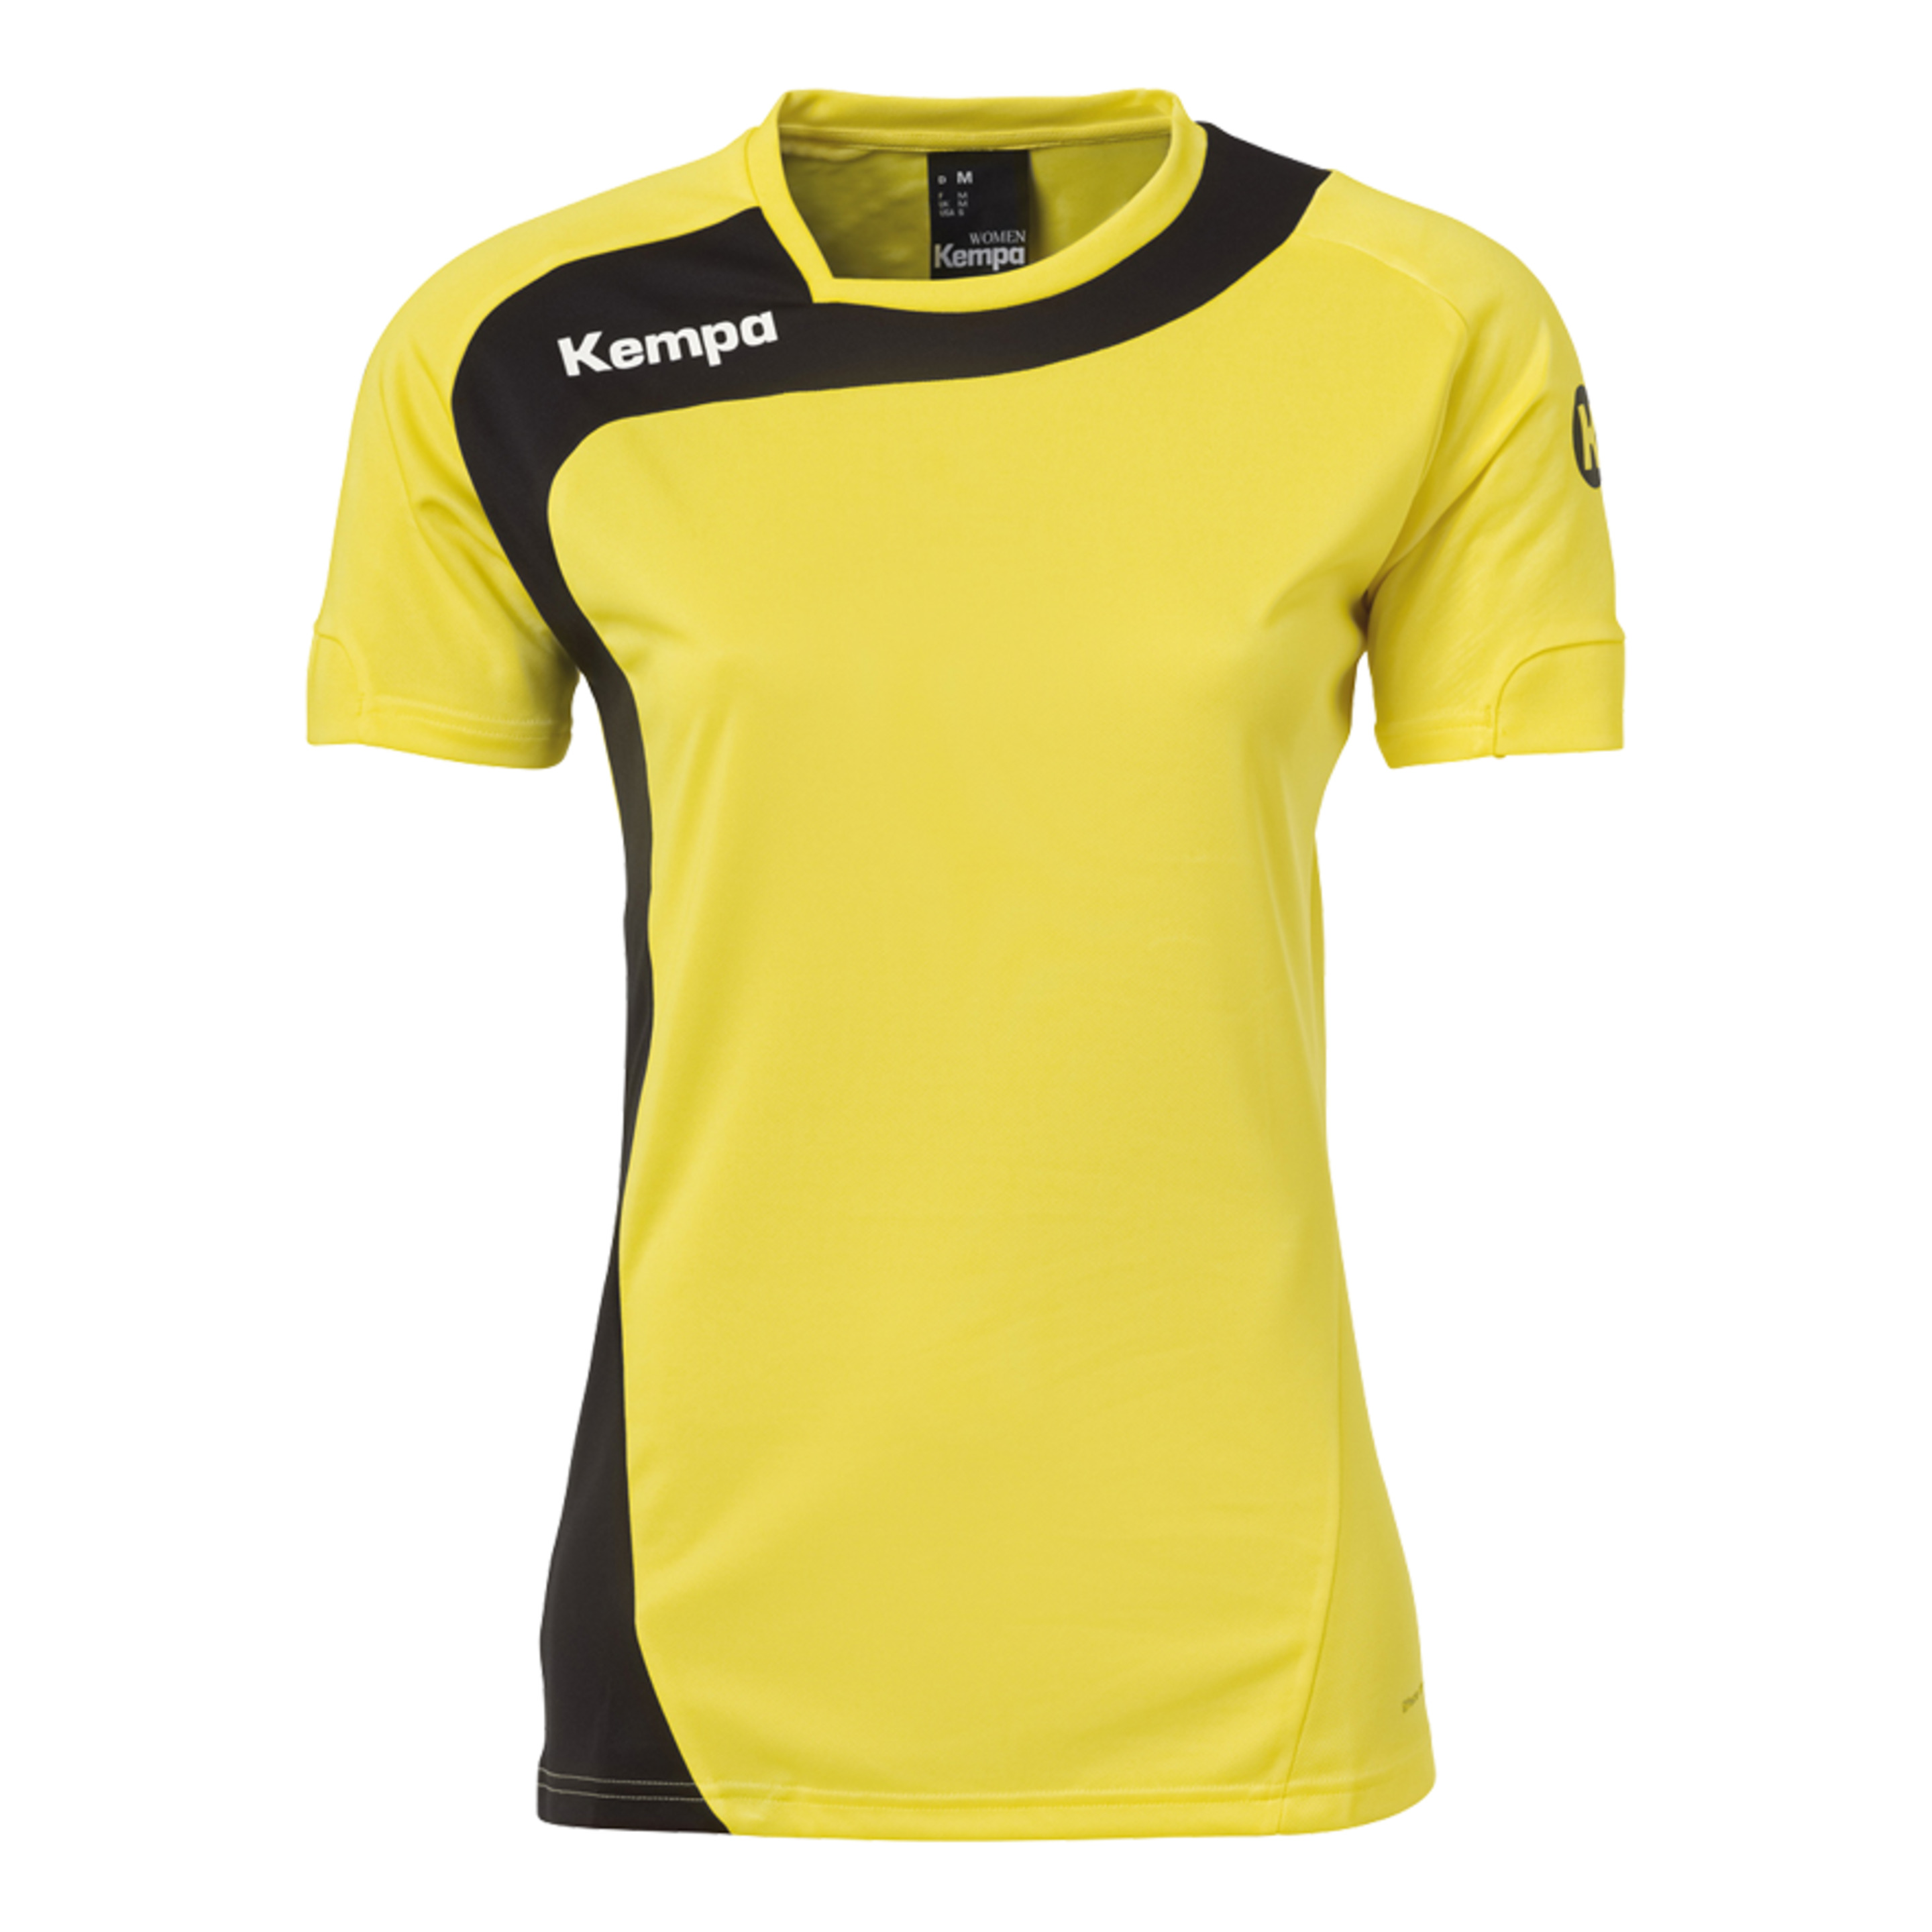 Peak Camiseta De Mujer Lima Amarillo/negro Kempa - amarillo - 